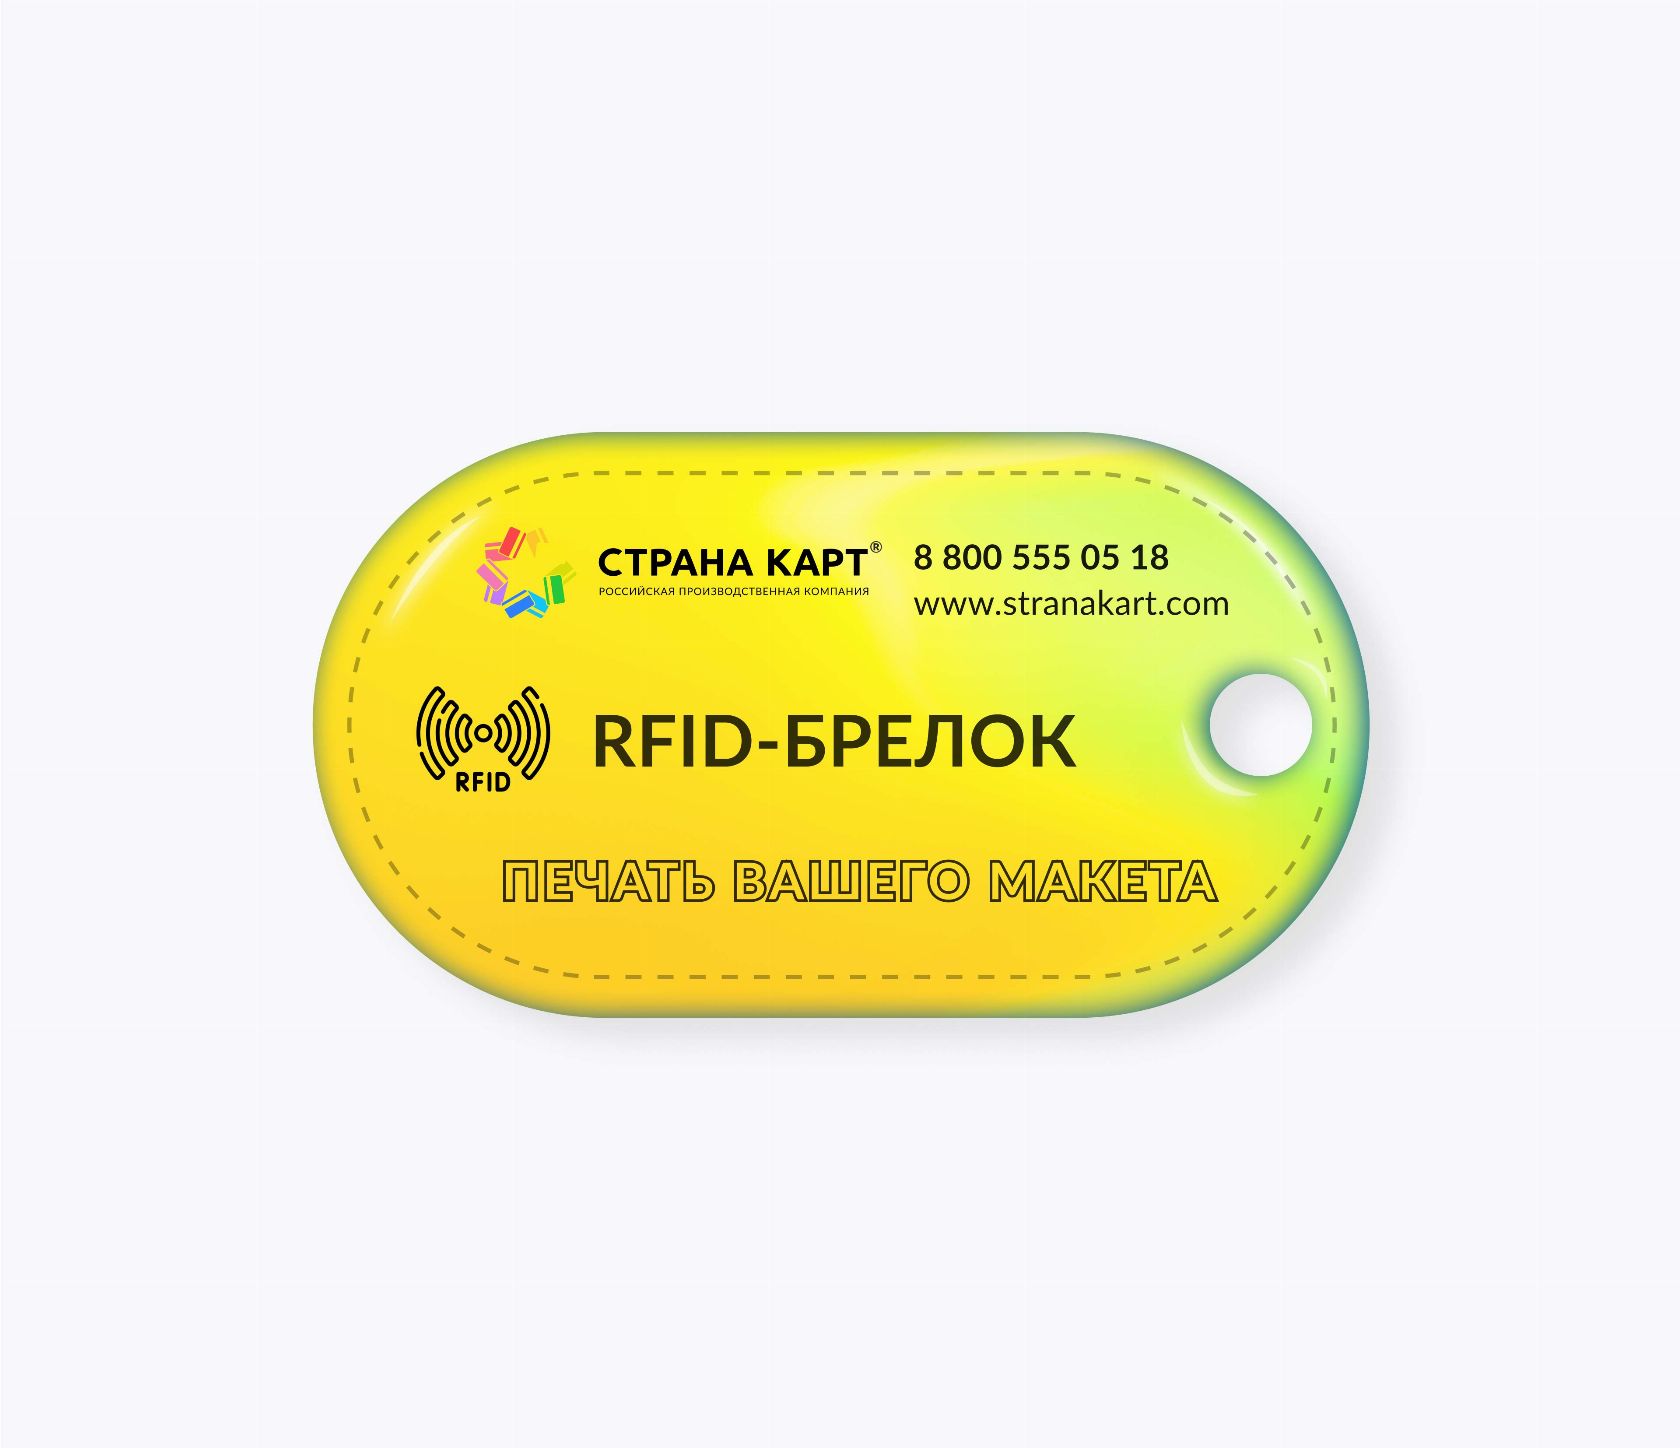 Овальные RFID-брелоки NEOKEY® с чипом  NXP MIFARE Ultralight C 7 byte UID RFID-брелоки NEOKEY® с чипом NXP MIFARE Ultralight C 7 byte UID и вашим логотипом